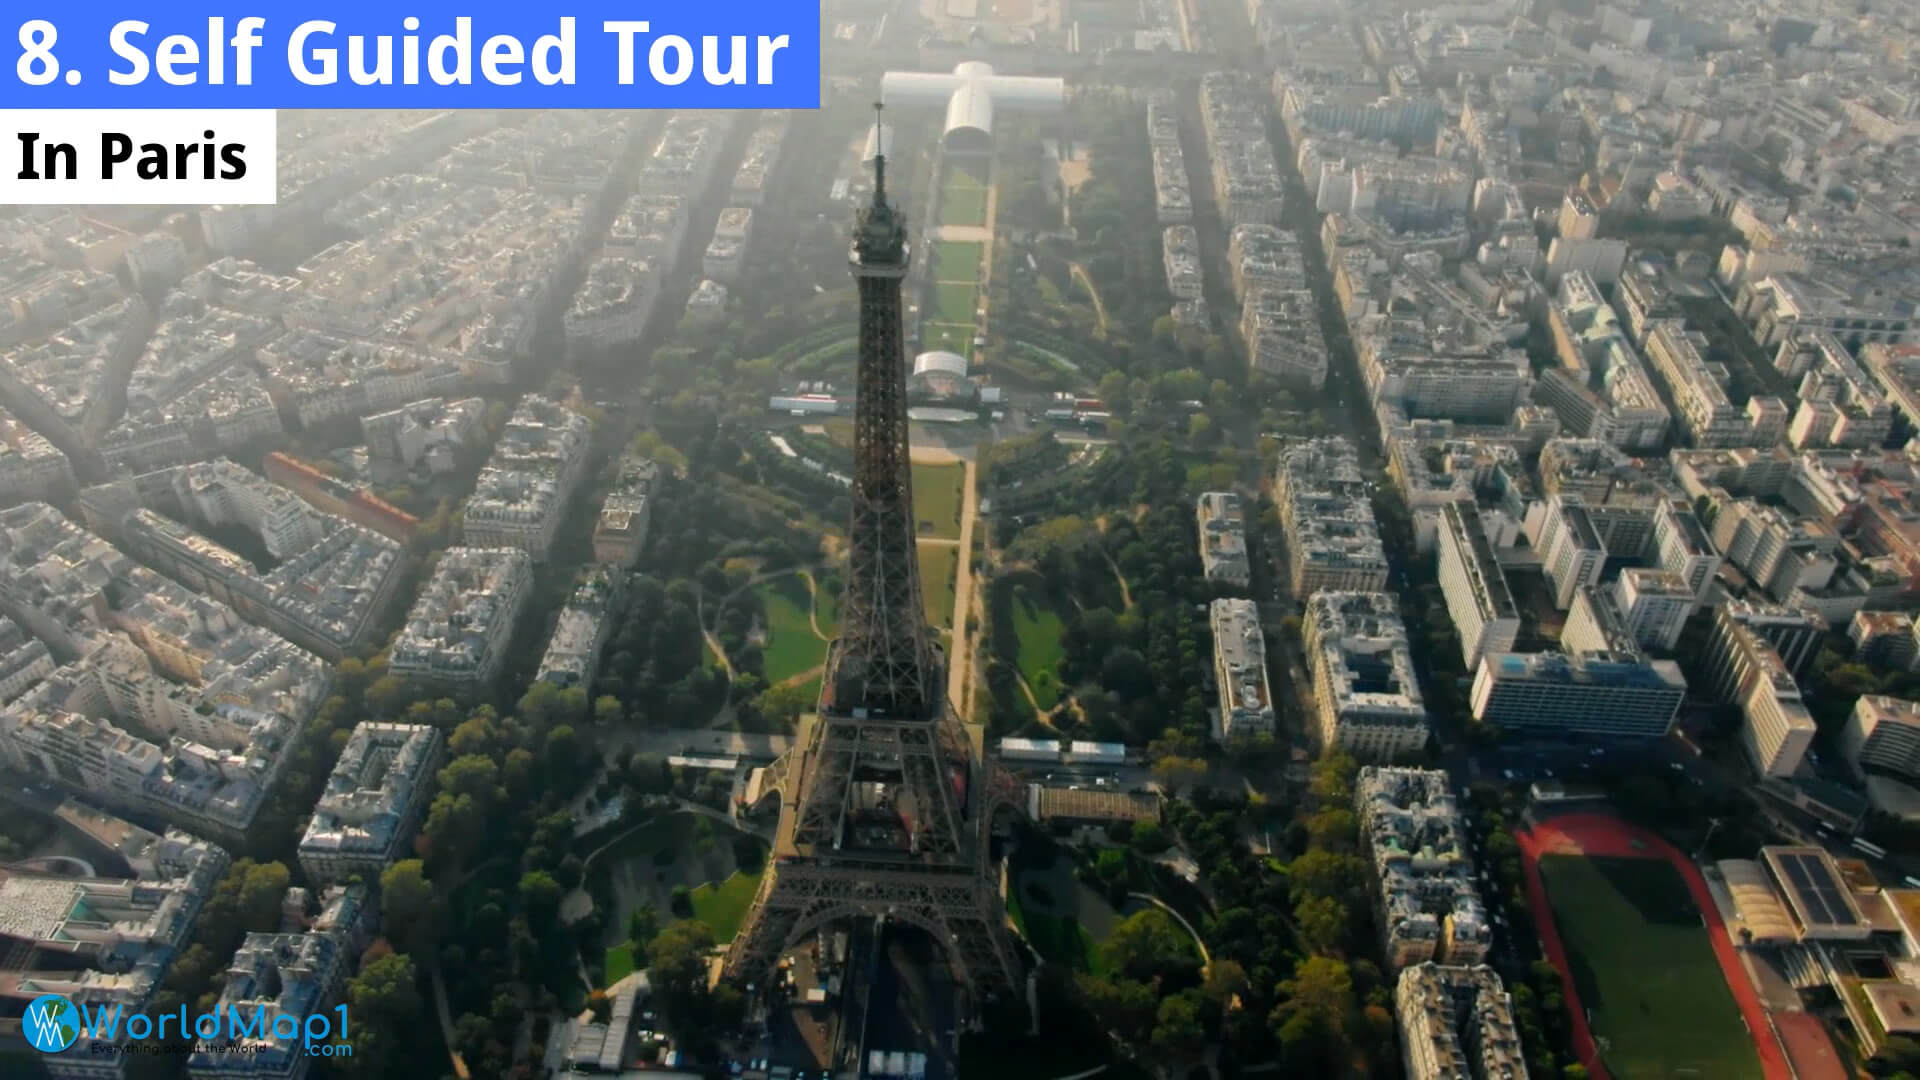 Self Guided Tour in Paris